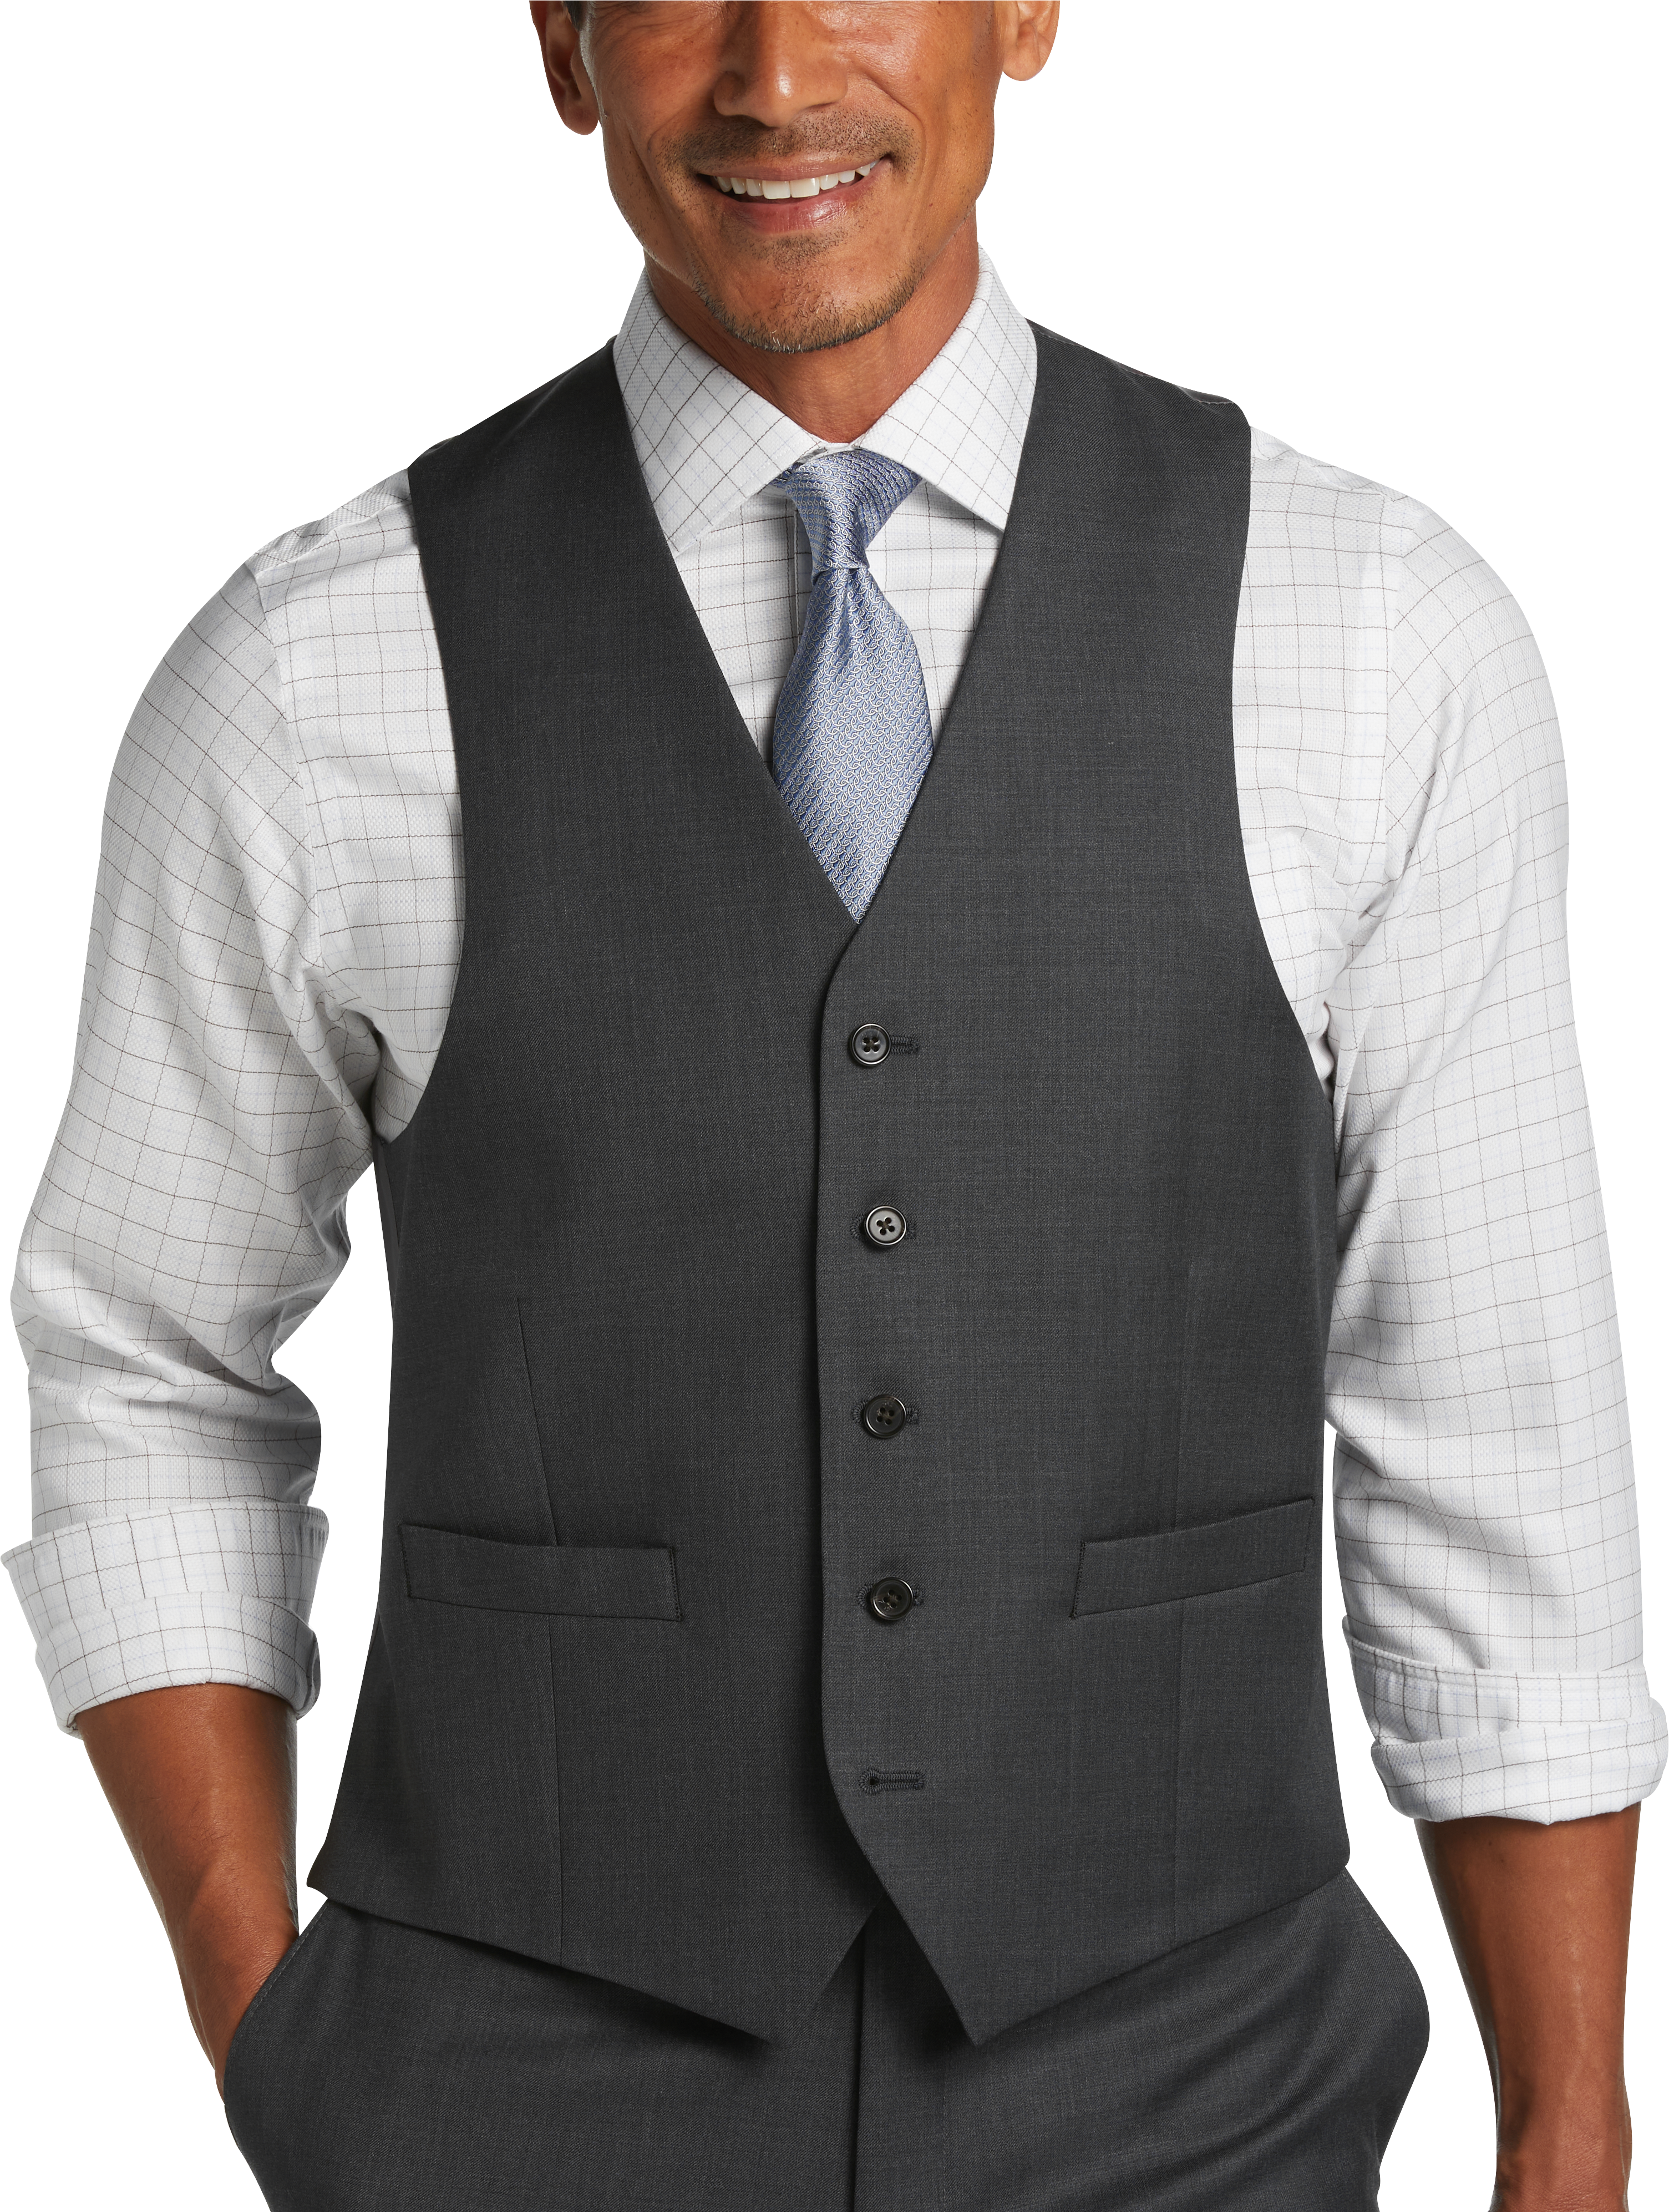 Lauren by Ralph Lauren Classic Fit Suit Separates Vest, Gray - Men's ...